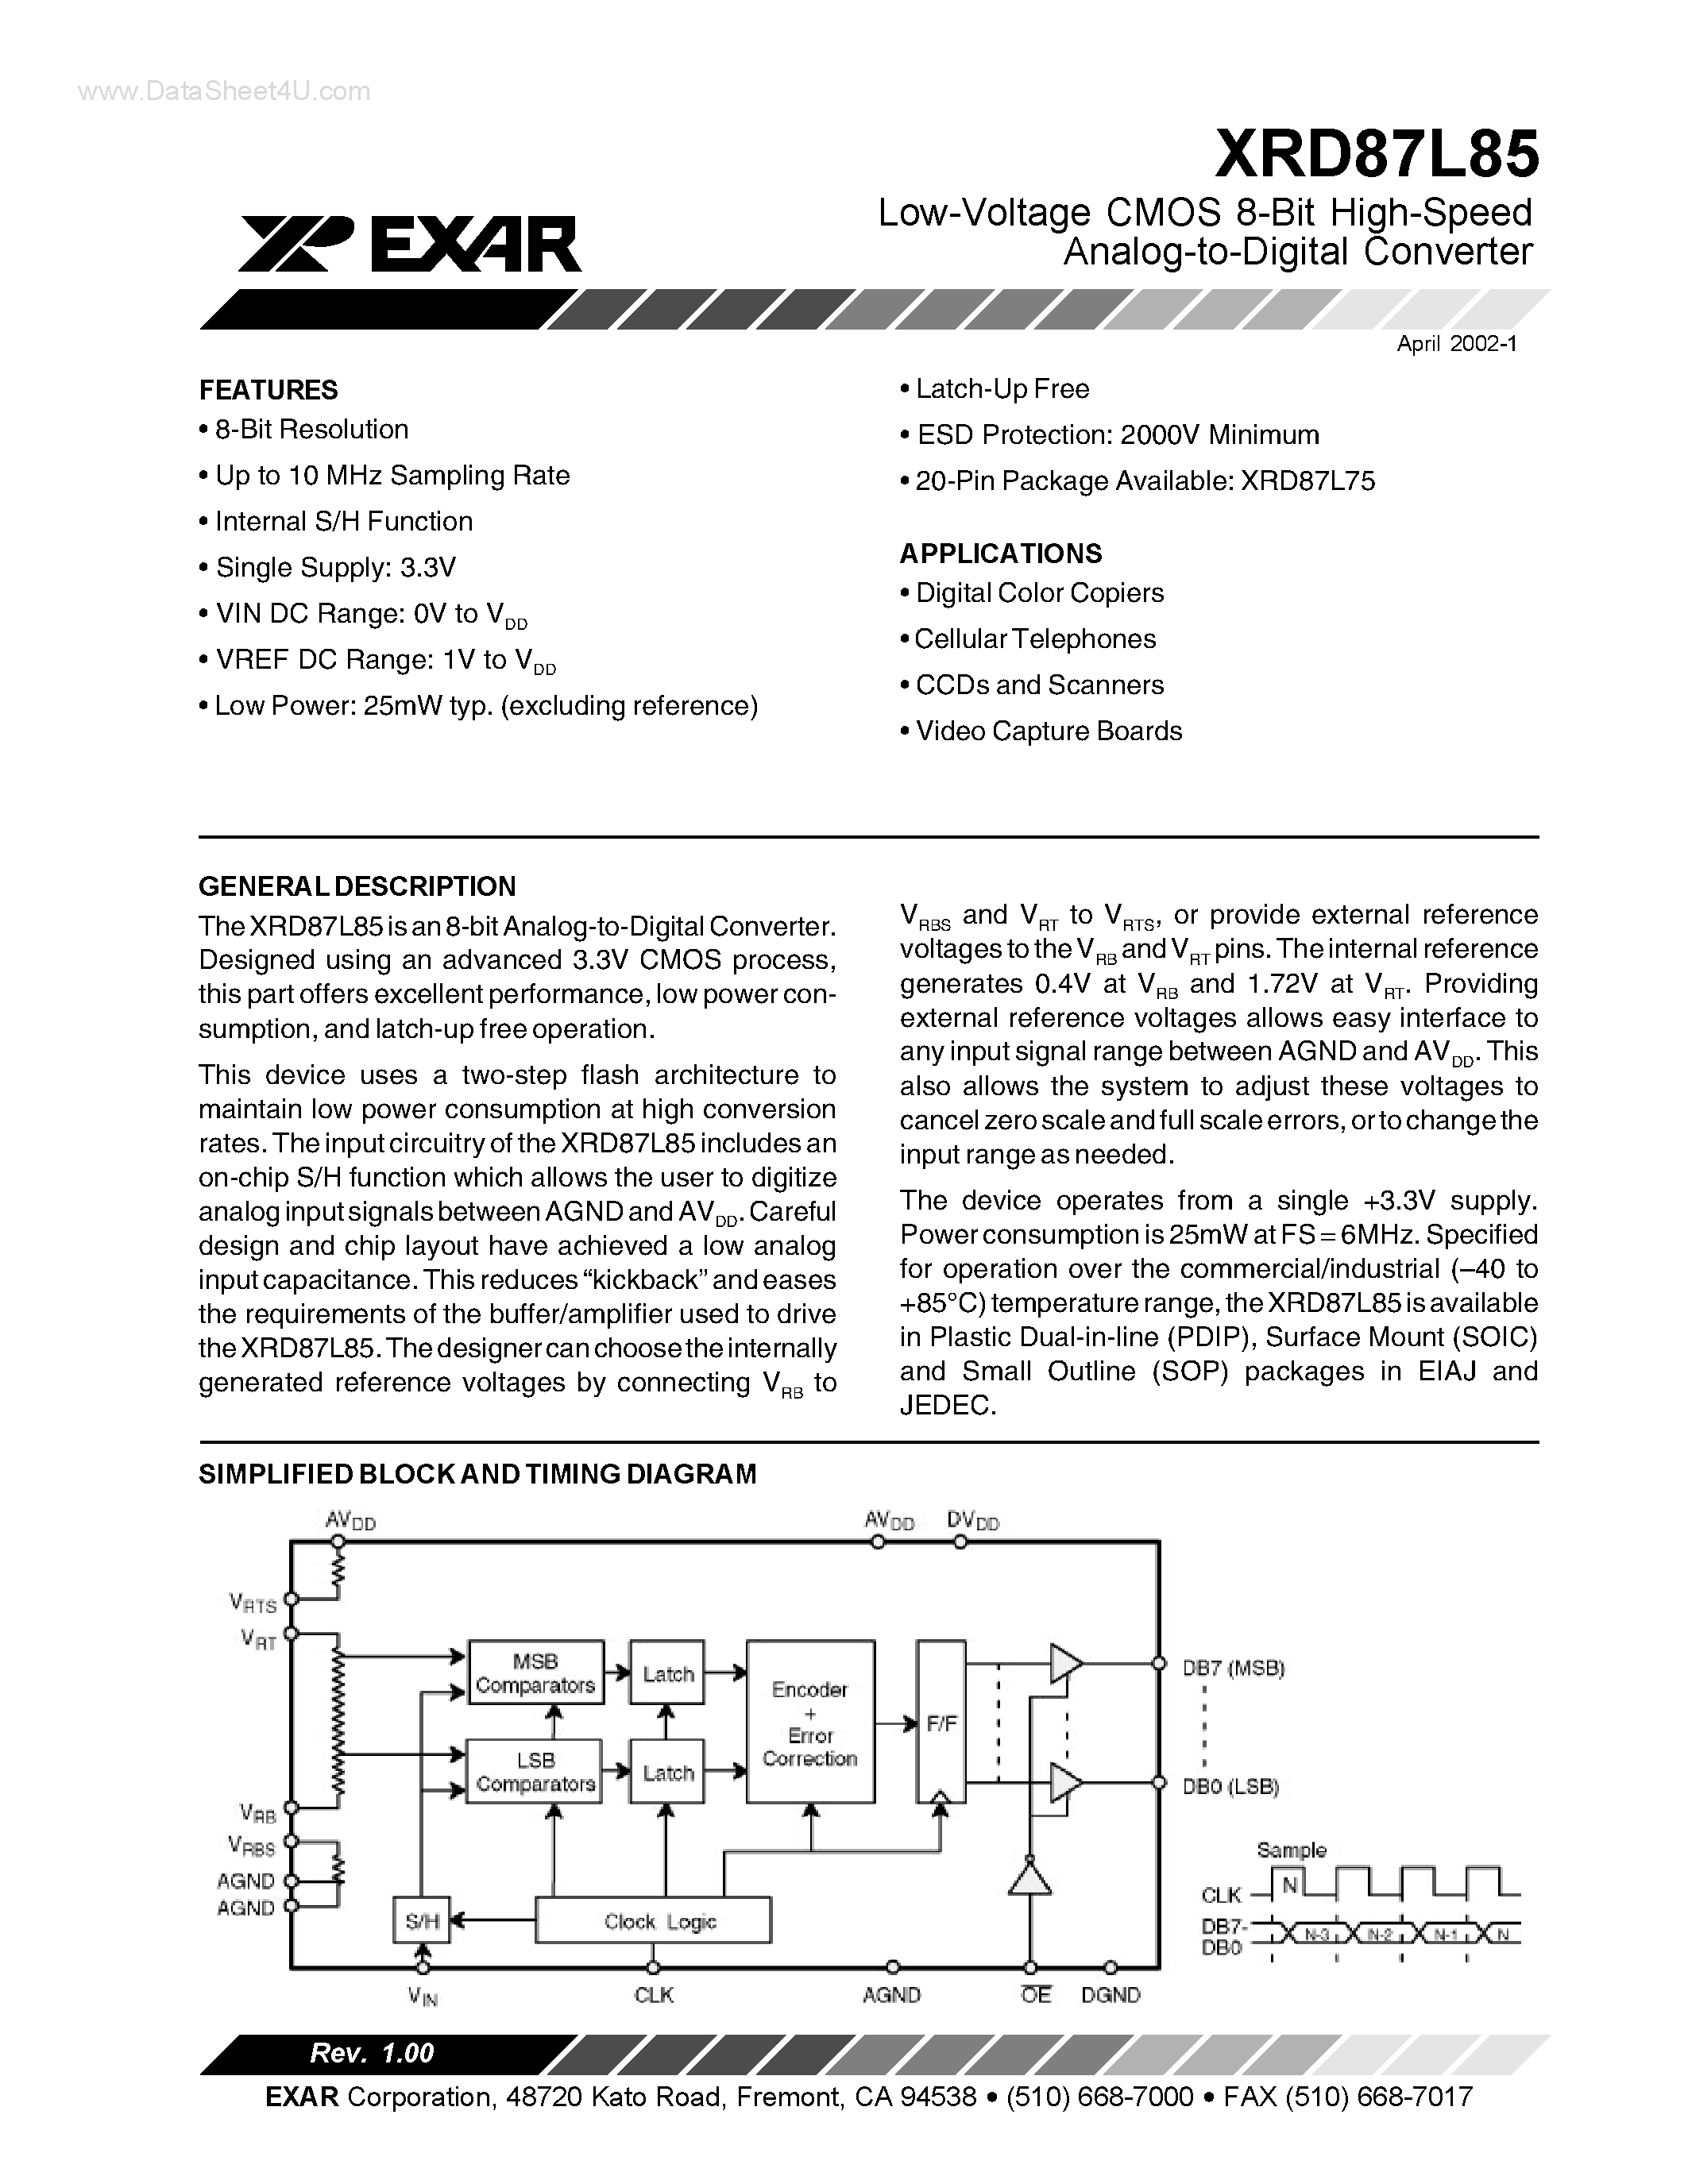 Datasheet XRD87L85 - Low-Voltage CMOS 8-Bit High-Speed Analog-to-Digital Converter page 1